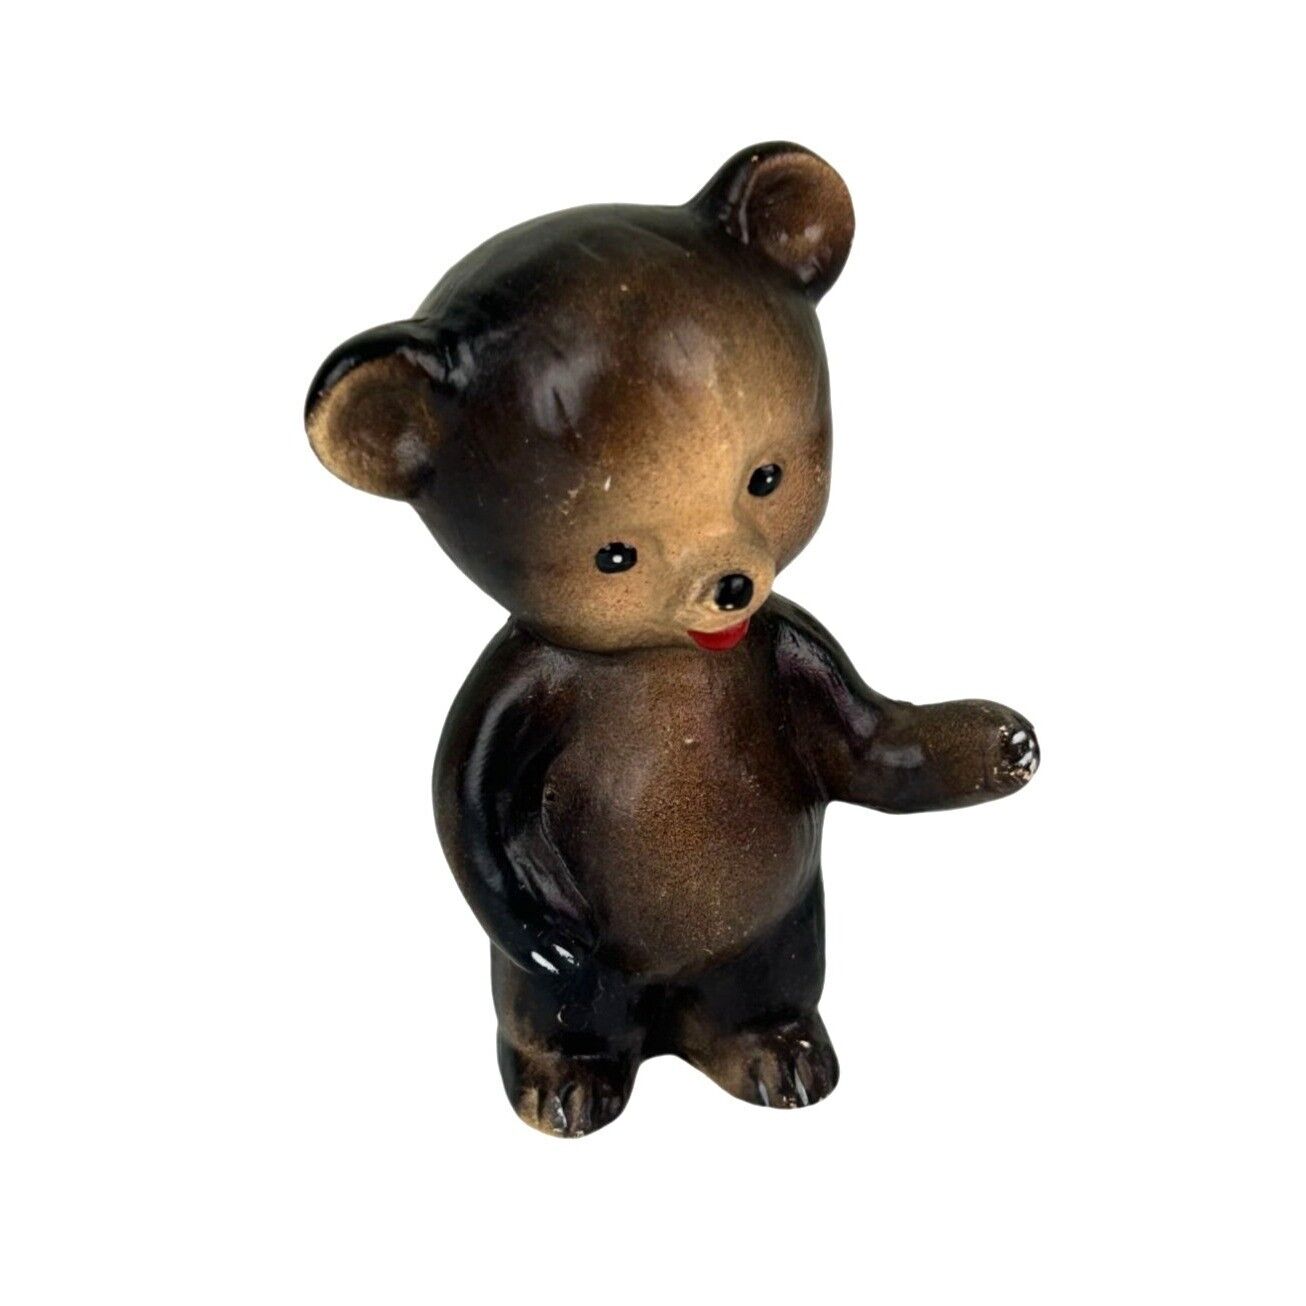 RARE Bradley Exclusives Japan Vintage Ceramic Brown Bear Figure Kitsch Decor